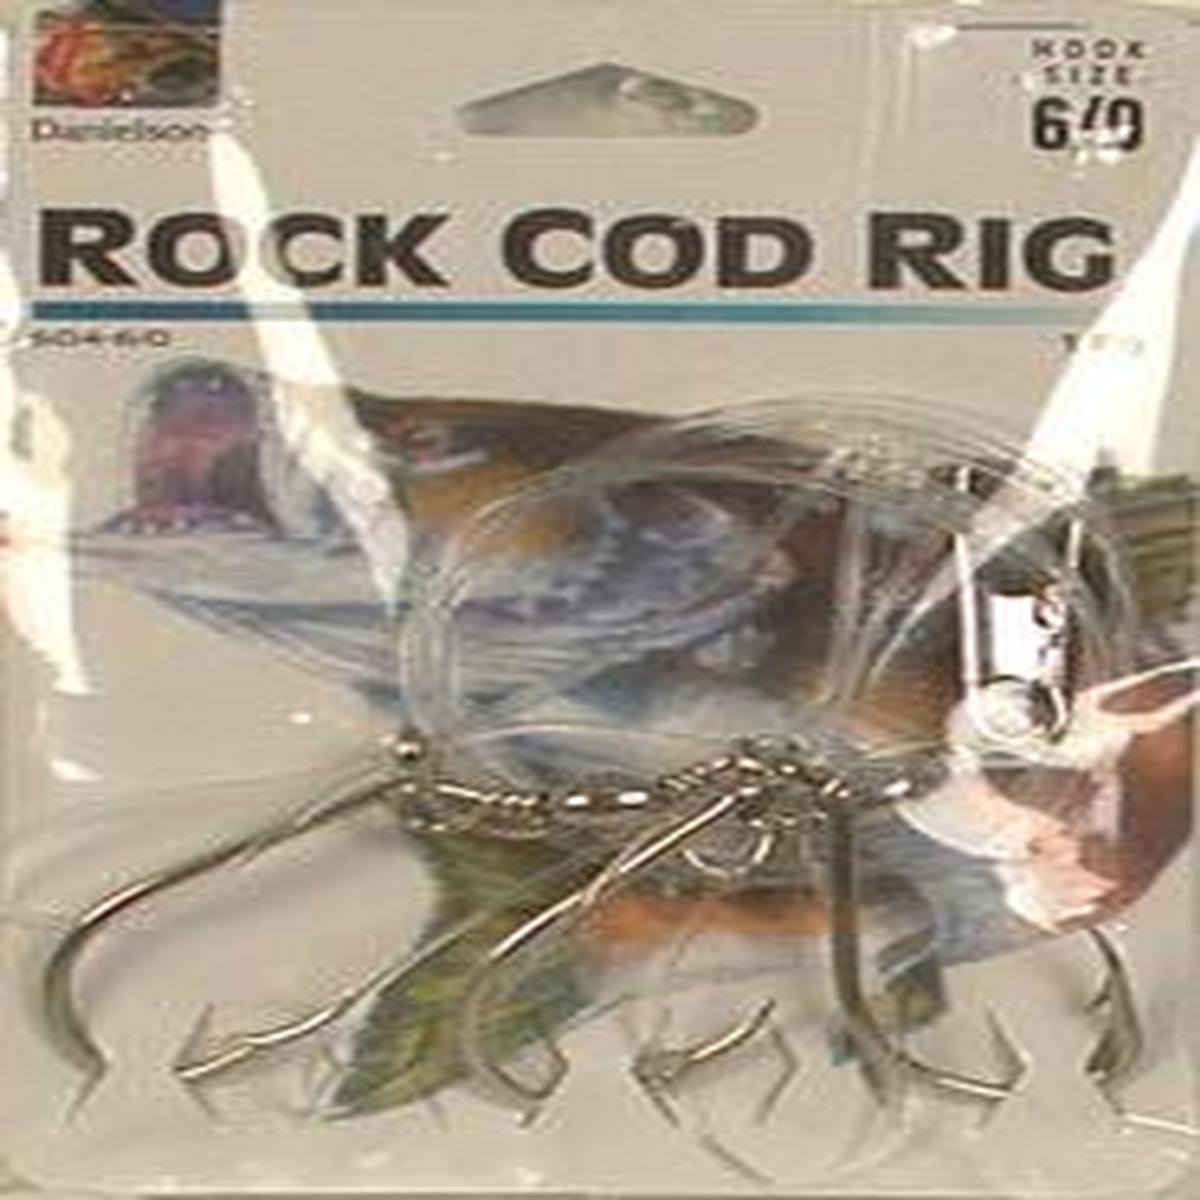 Danielson Rig Rock Cod Size 6/0 - 604-6/0